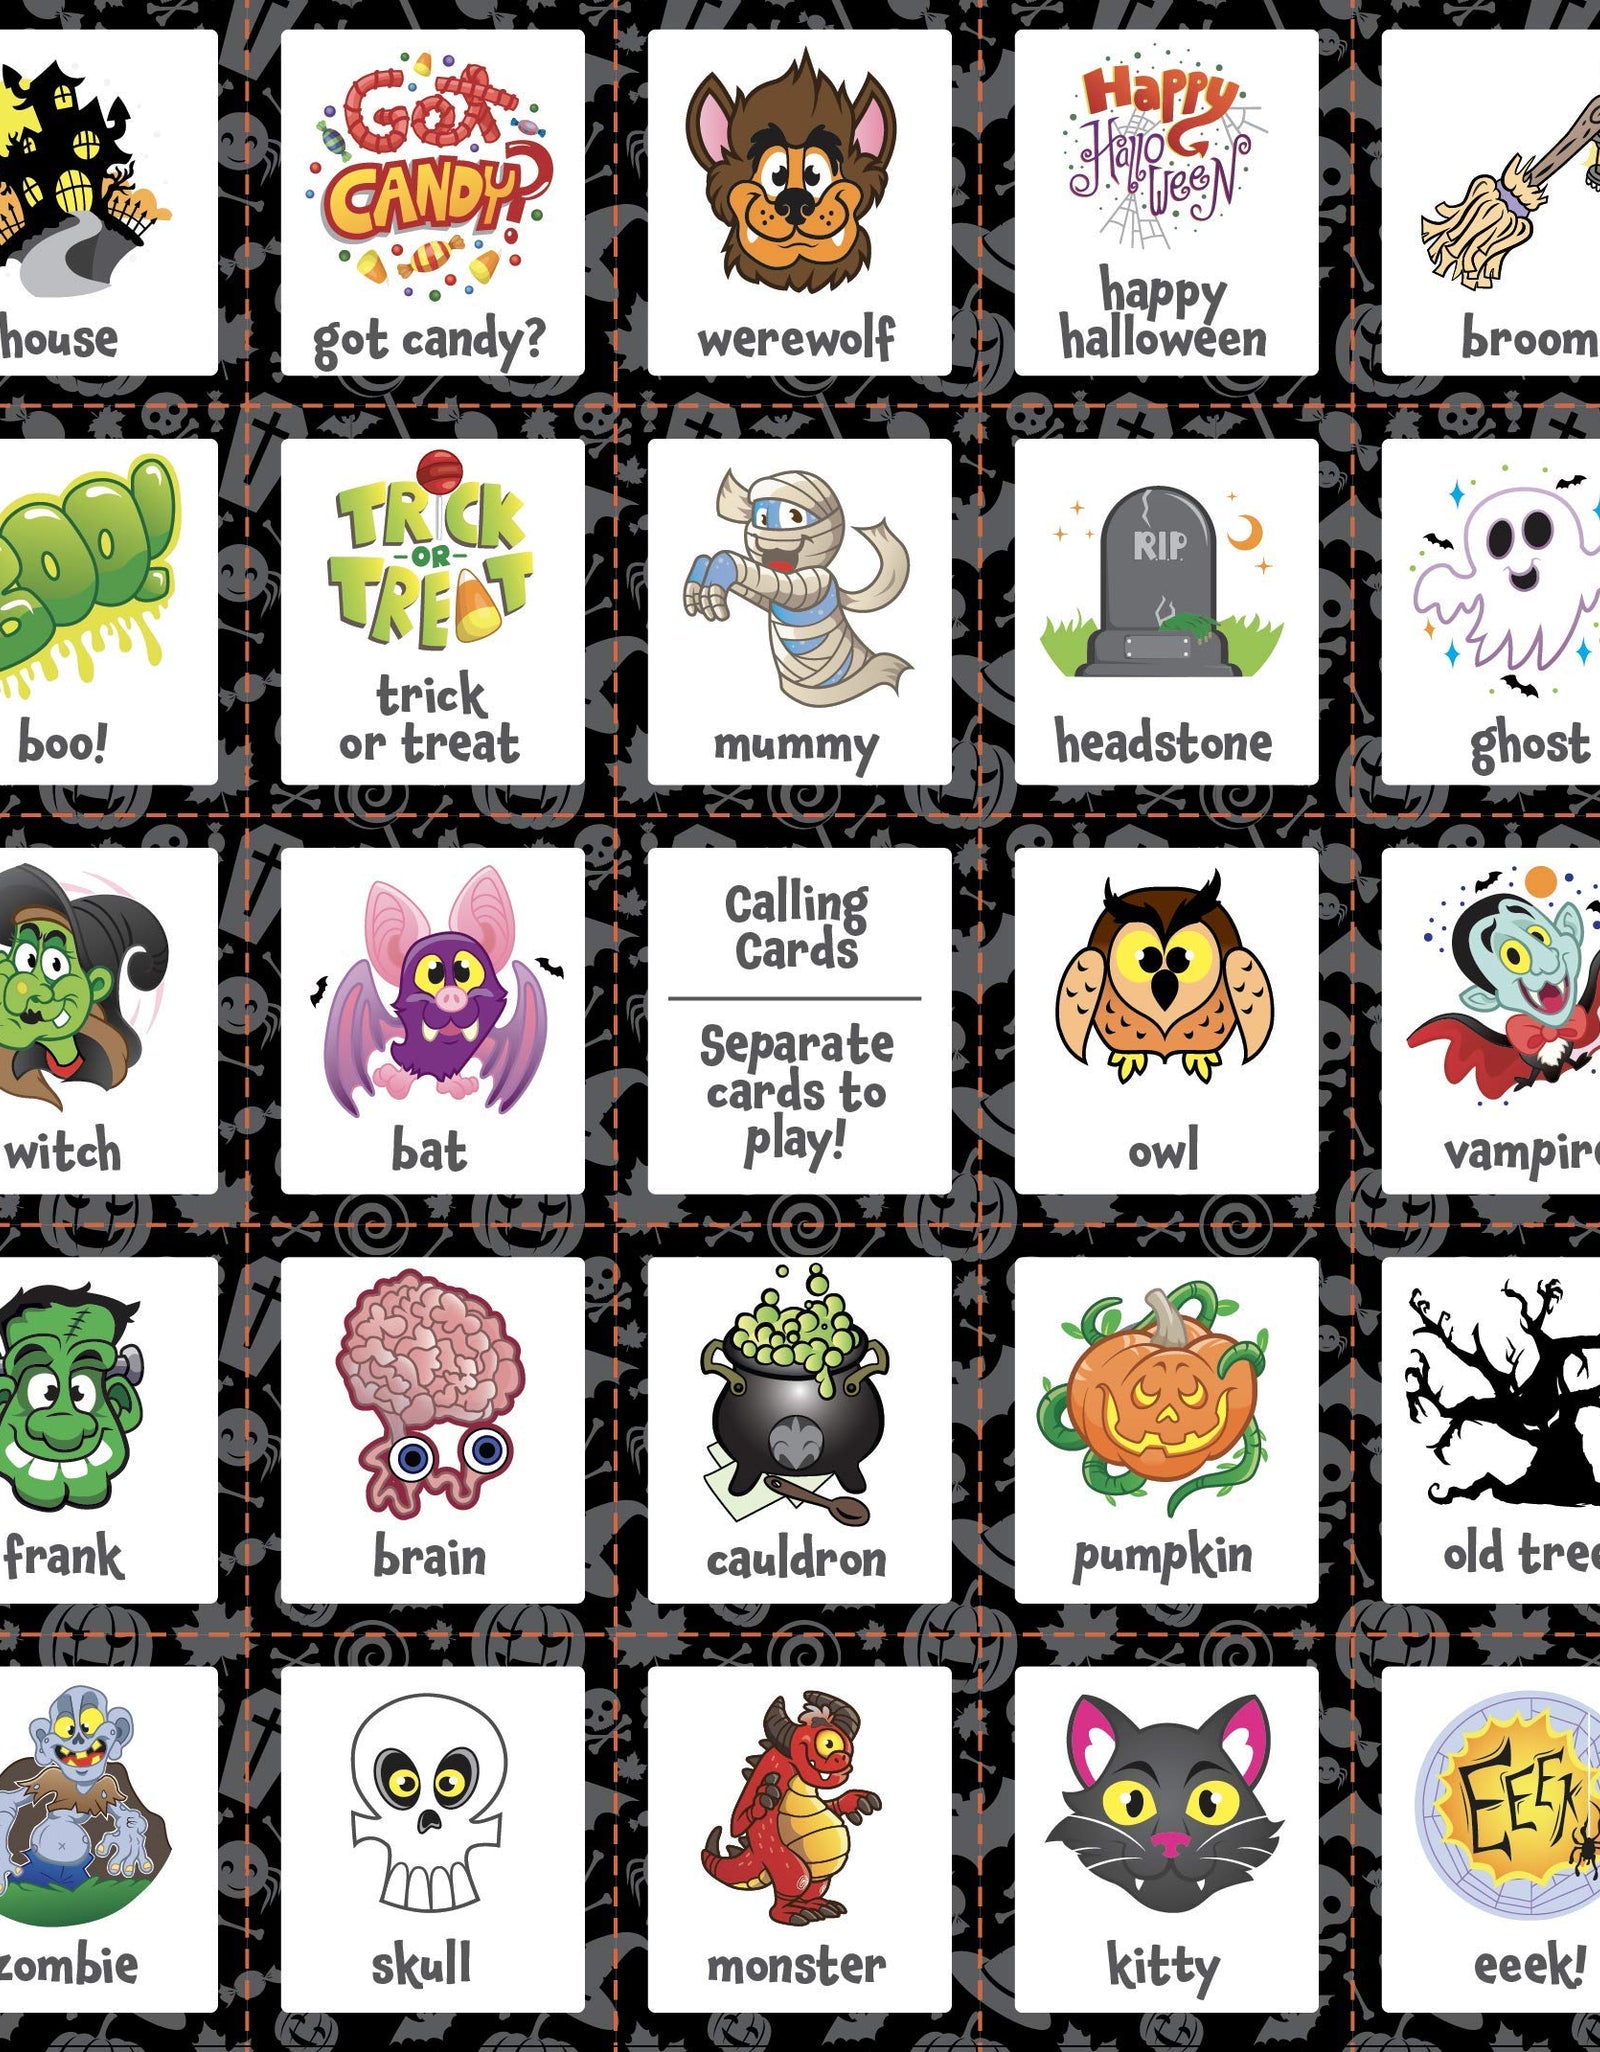 JOYIN 32 Halloween Bingo Game Cards (4x4 & 5x5) – 16 Players for Halloween Party Card Games, School Classroom Games, Trick or Treating, Halloween Party Favors Supplies, Family Activity